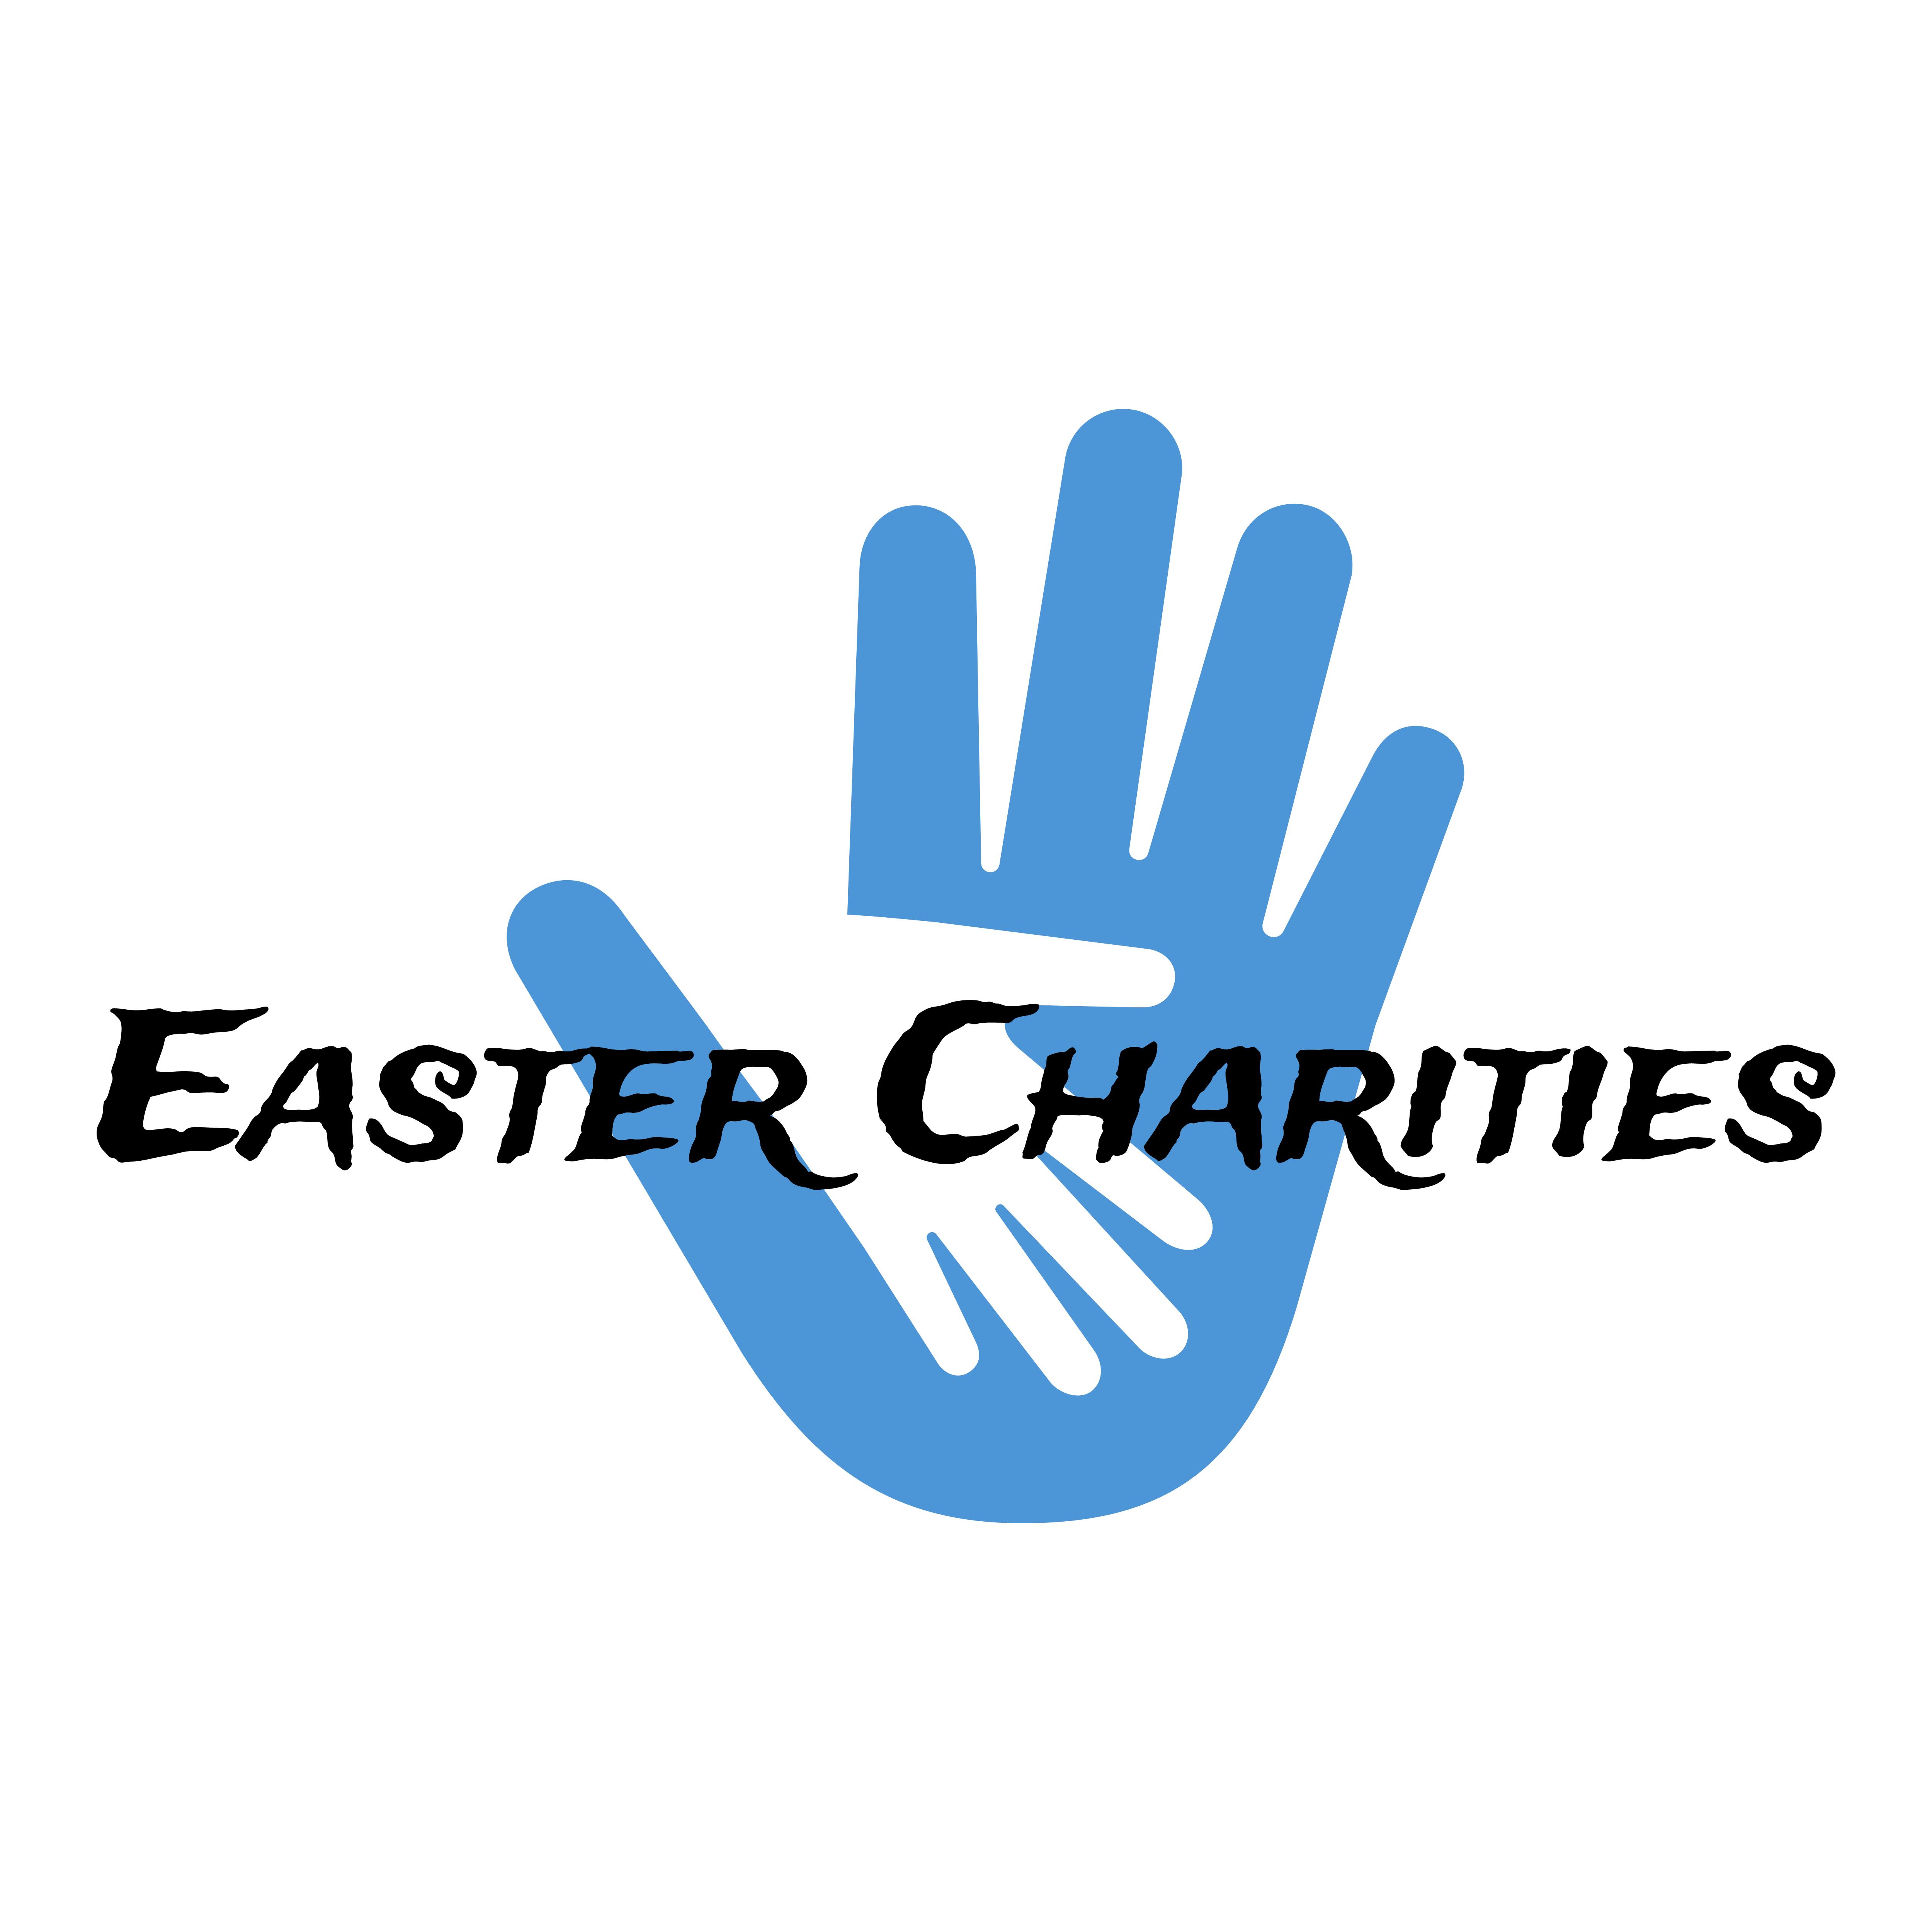 Easter Charities logo